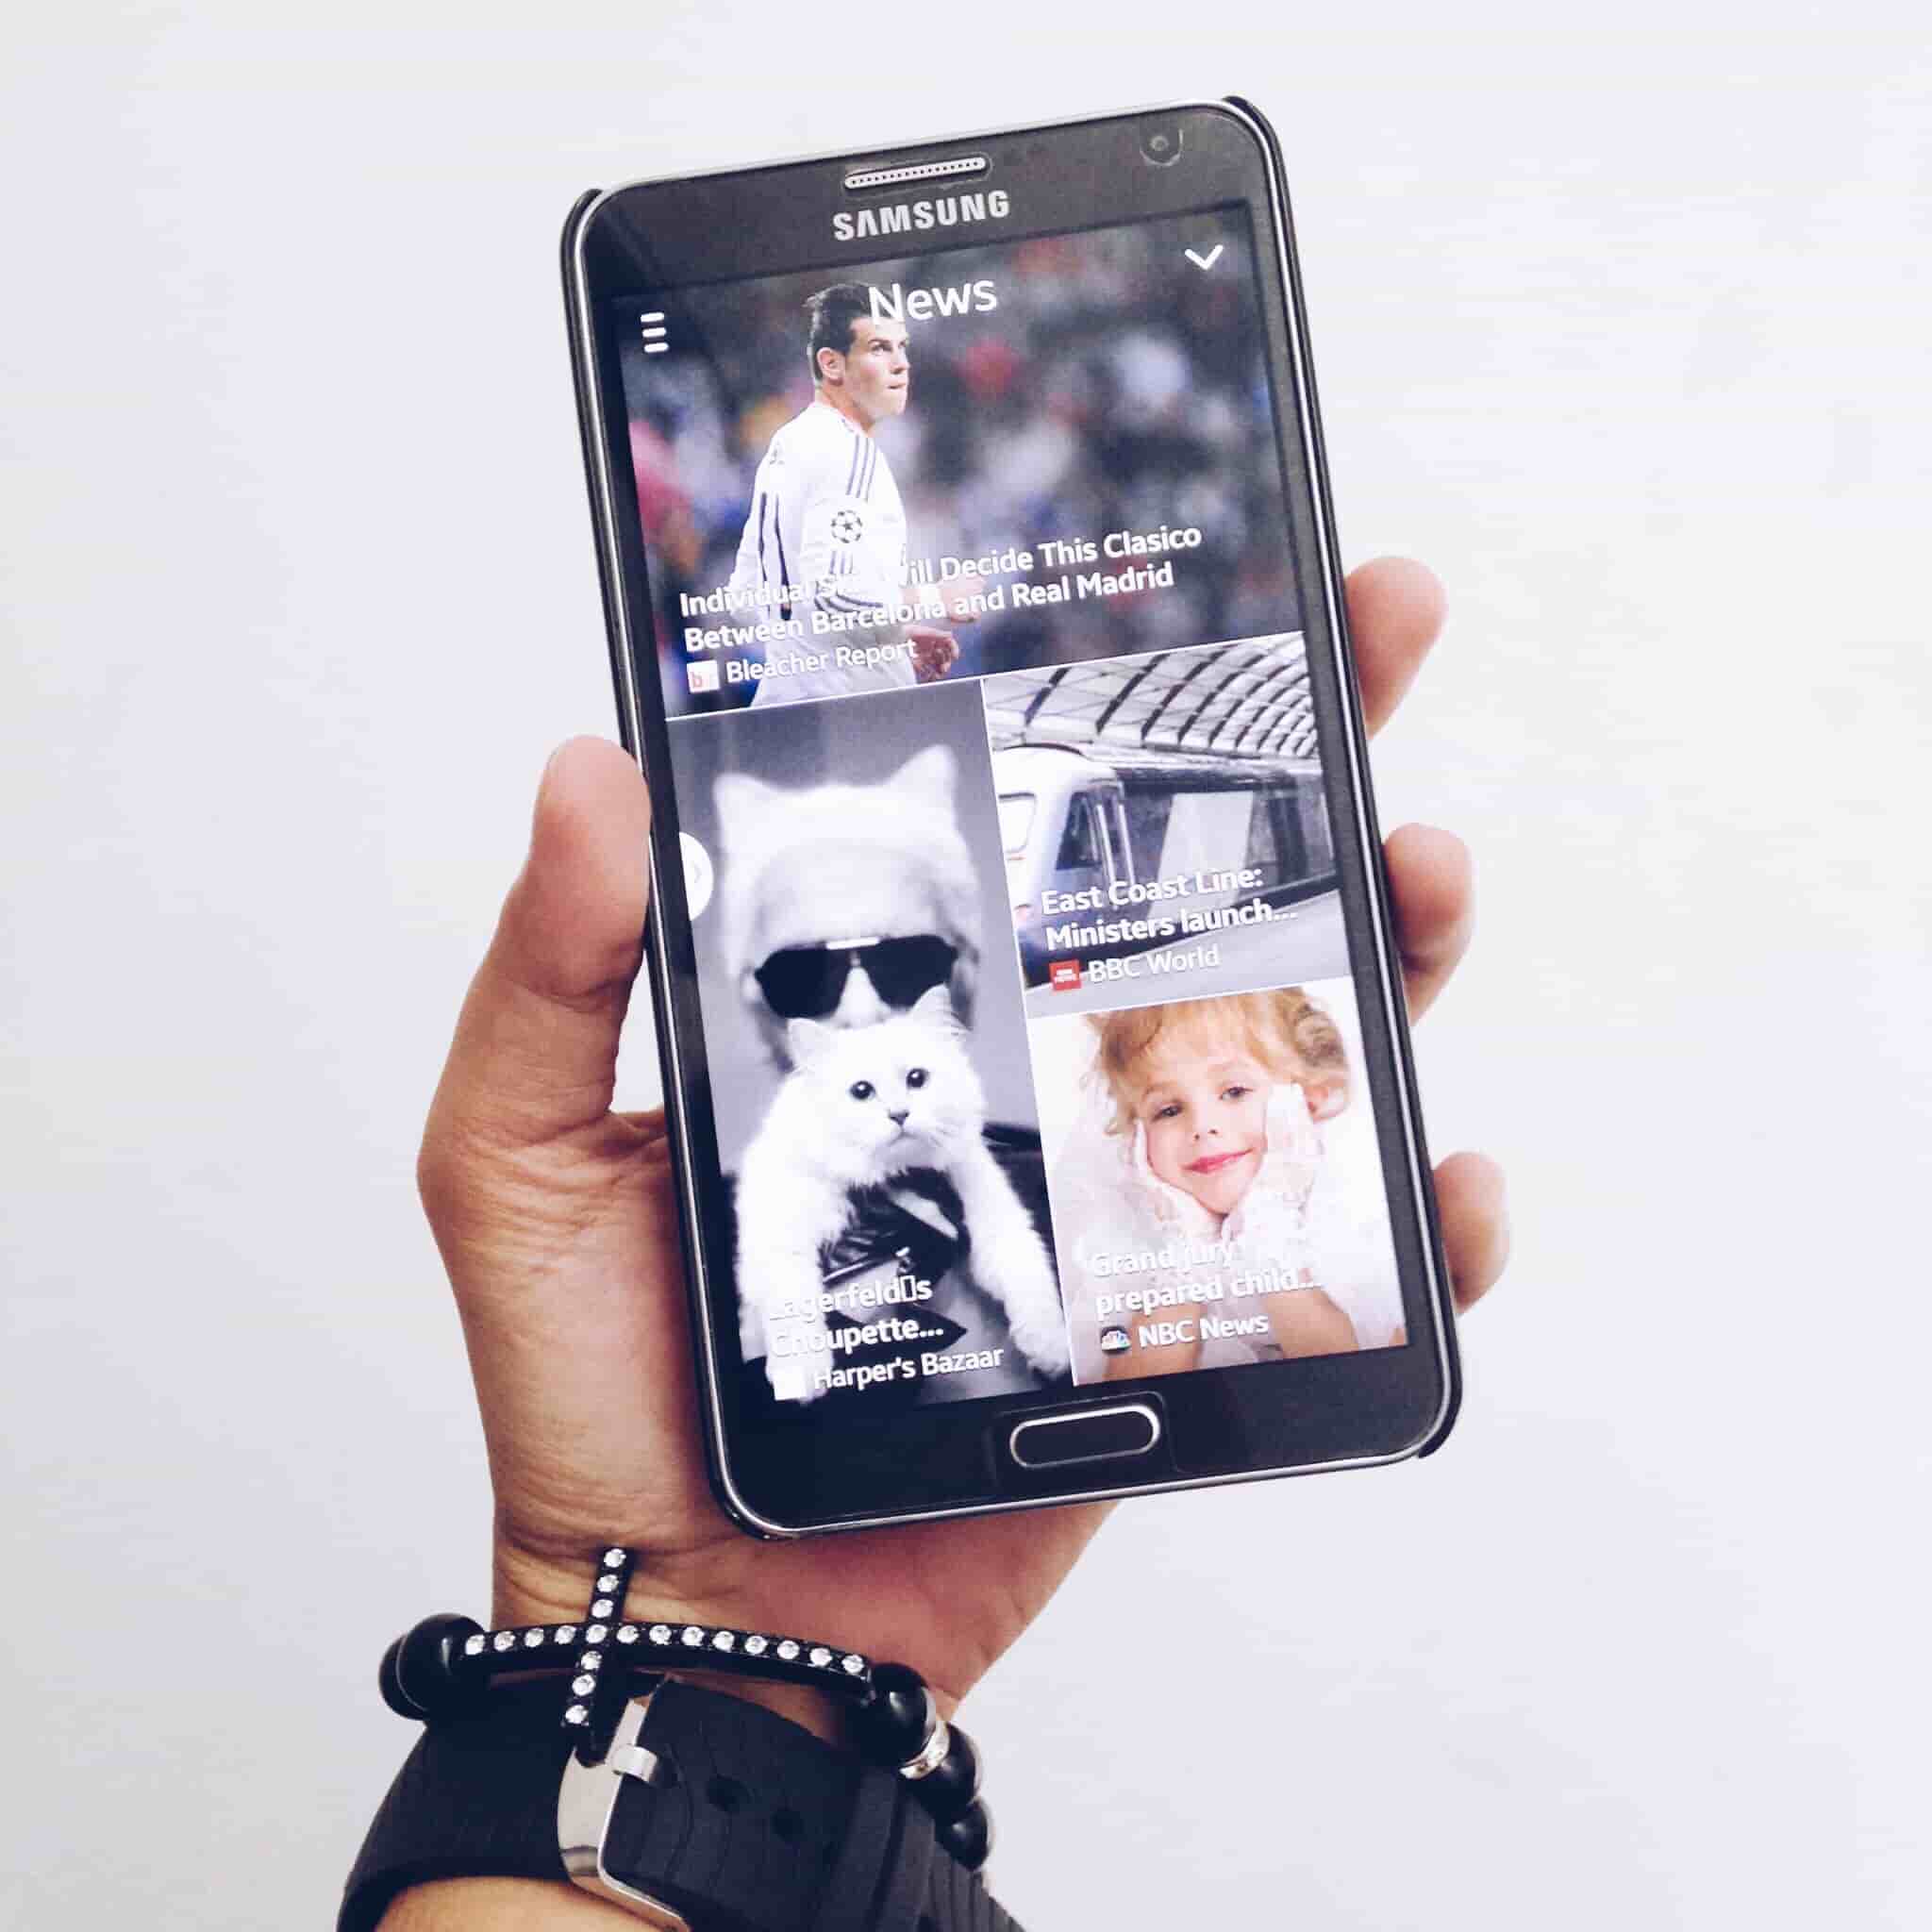 how to screenshot on Samsung device